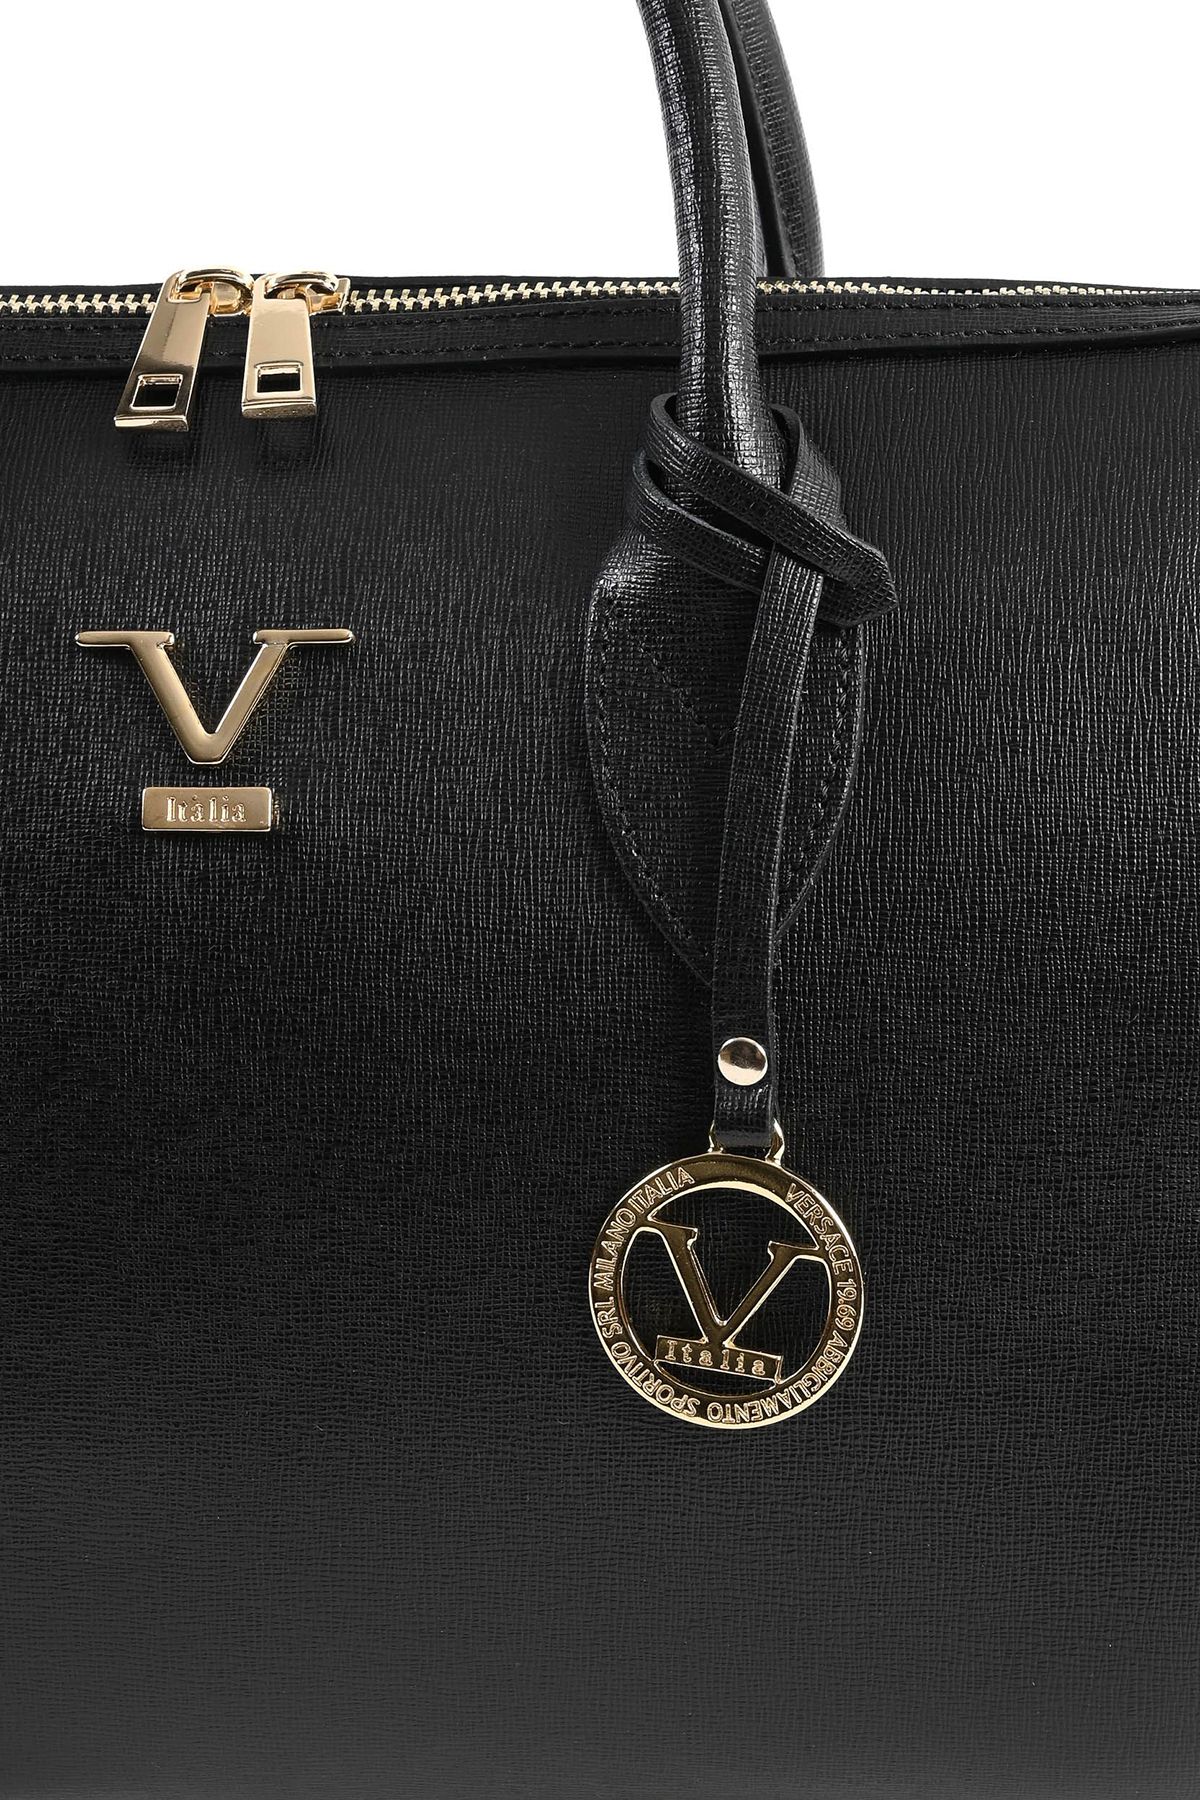 V Italia Versace 1969 Leather Croc embossed satchel handbag made in Italy  Black | eBay